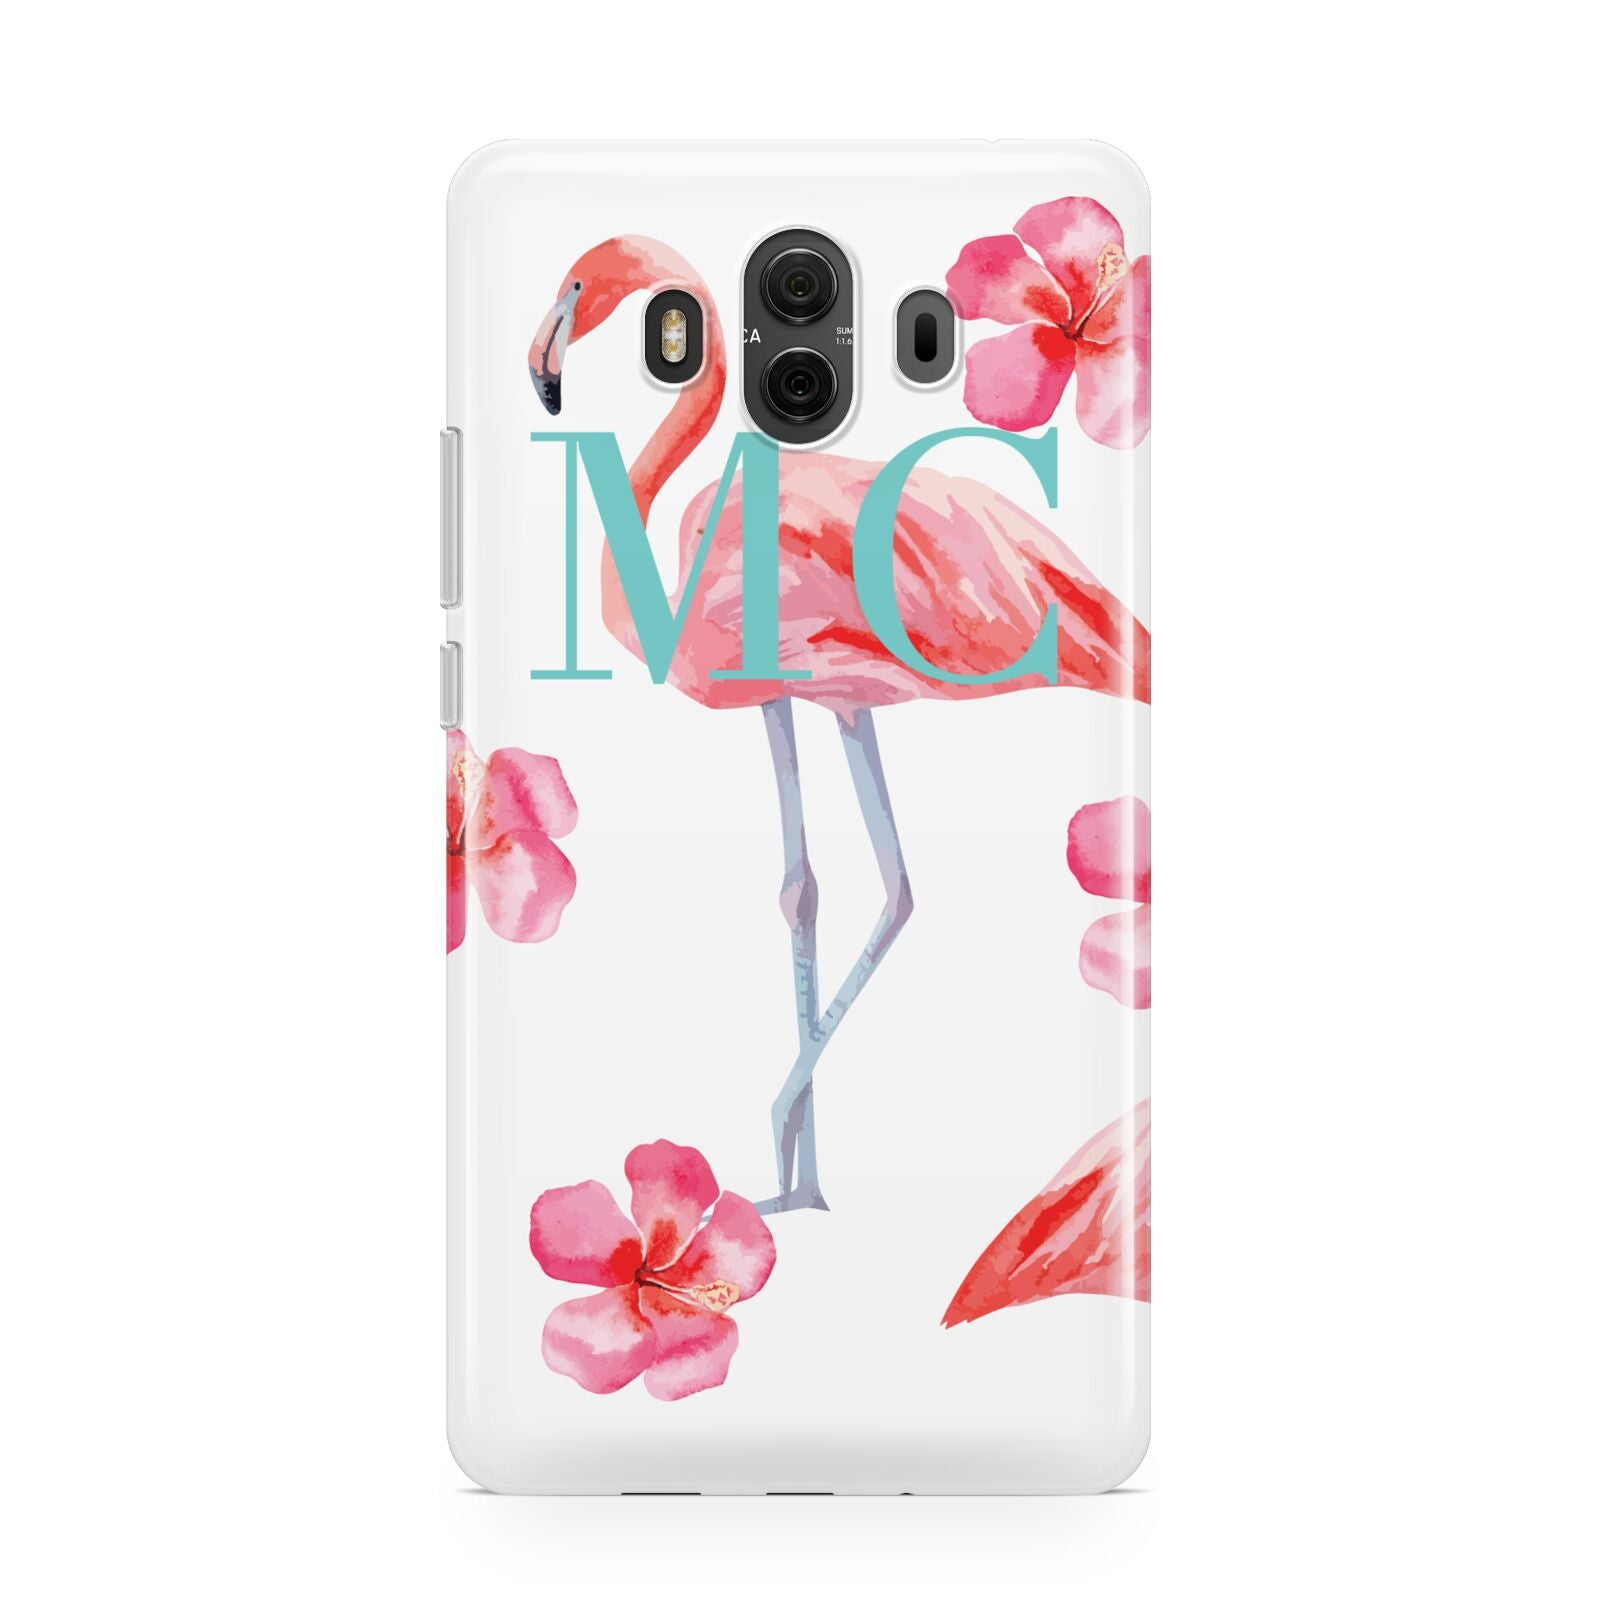 Personalised Initials Flamingo 3 Huawei Mate 10 Protective Phone Case